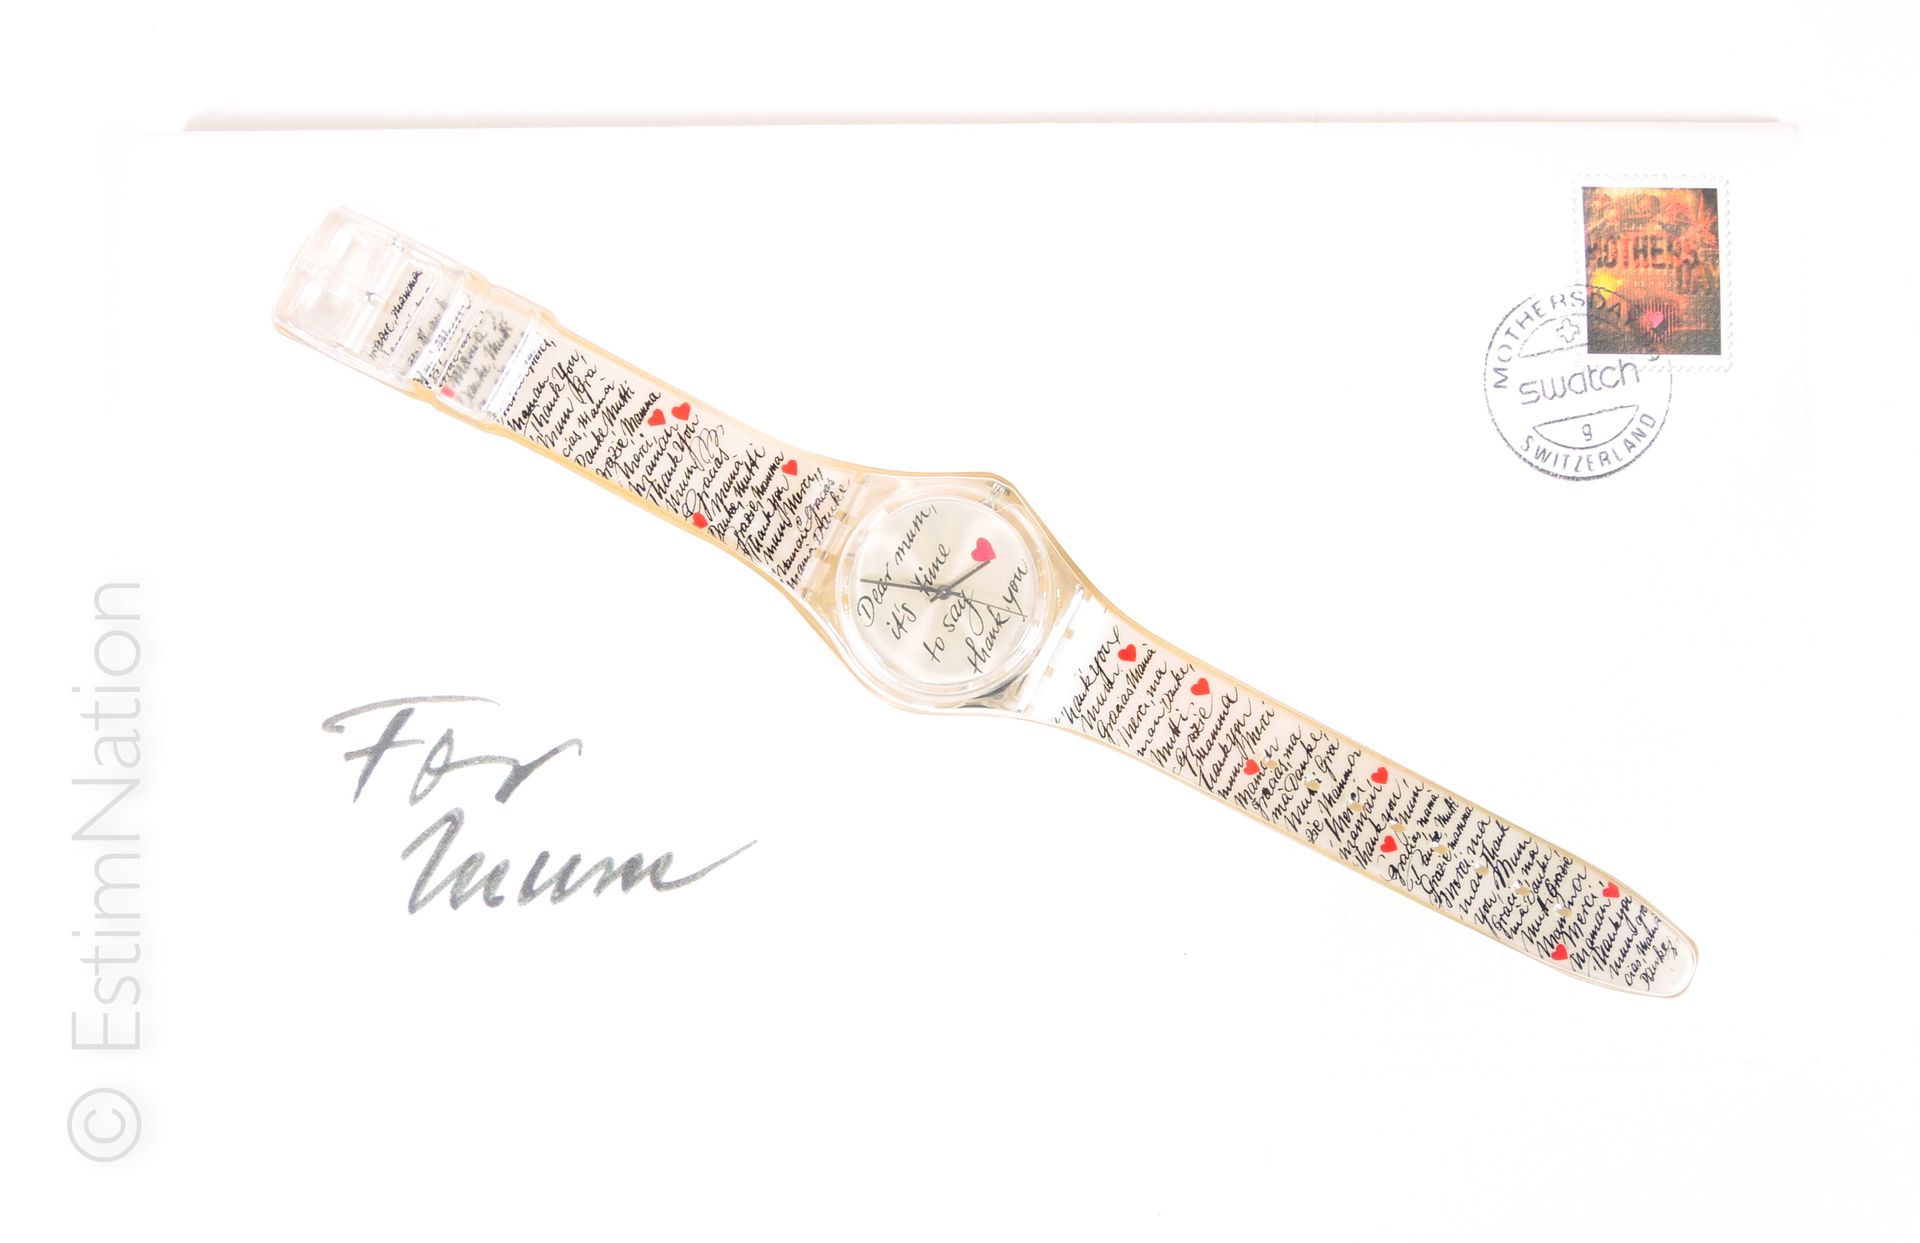 SWATCH - DEAR MUM - 1999 色卡 - 亲爱的妈妈

原创：绅士



1999年母亲节特别版，装在模拟邮票信封的展示盒中，标准型手表，银色&hellip;